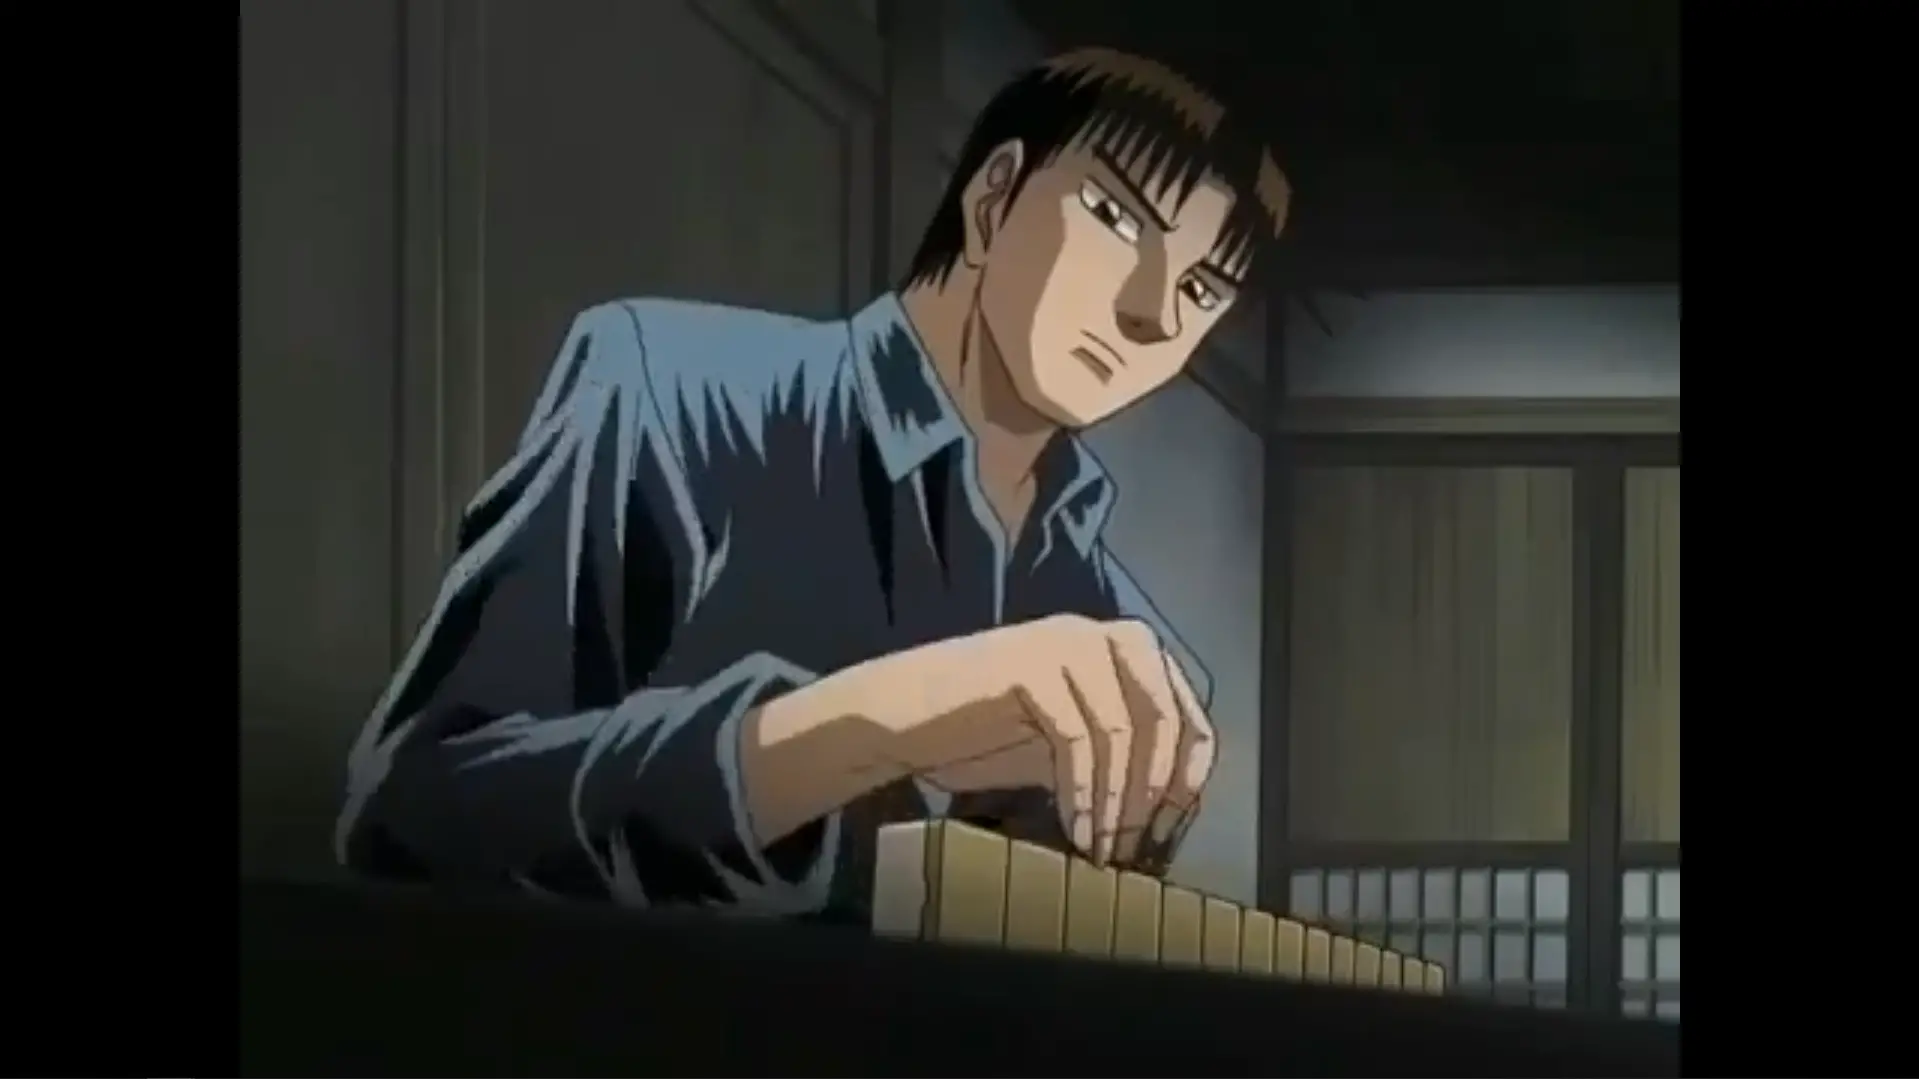 Tetsuya carefully choose his next mahjong tile in a dark old room.